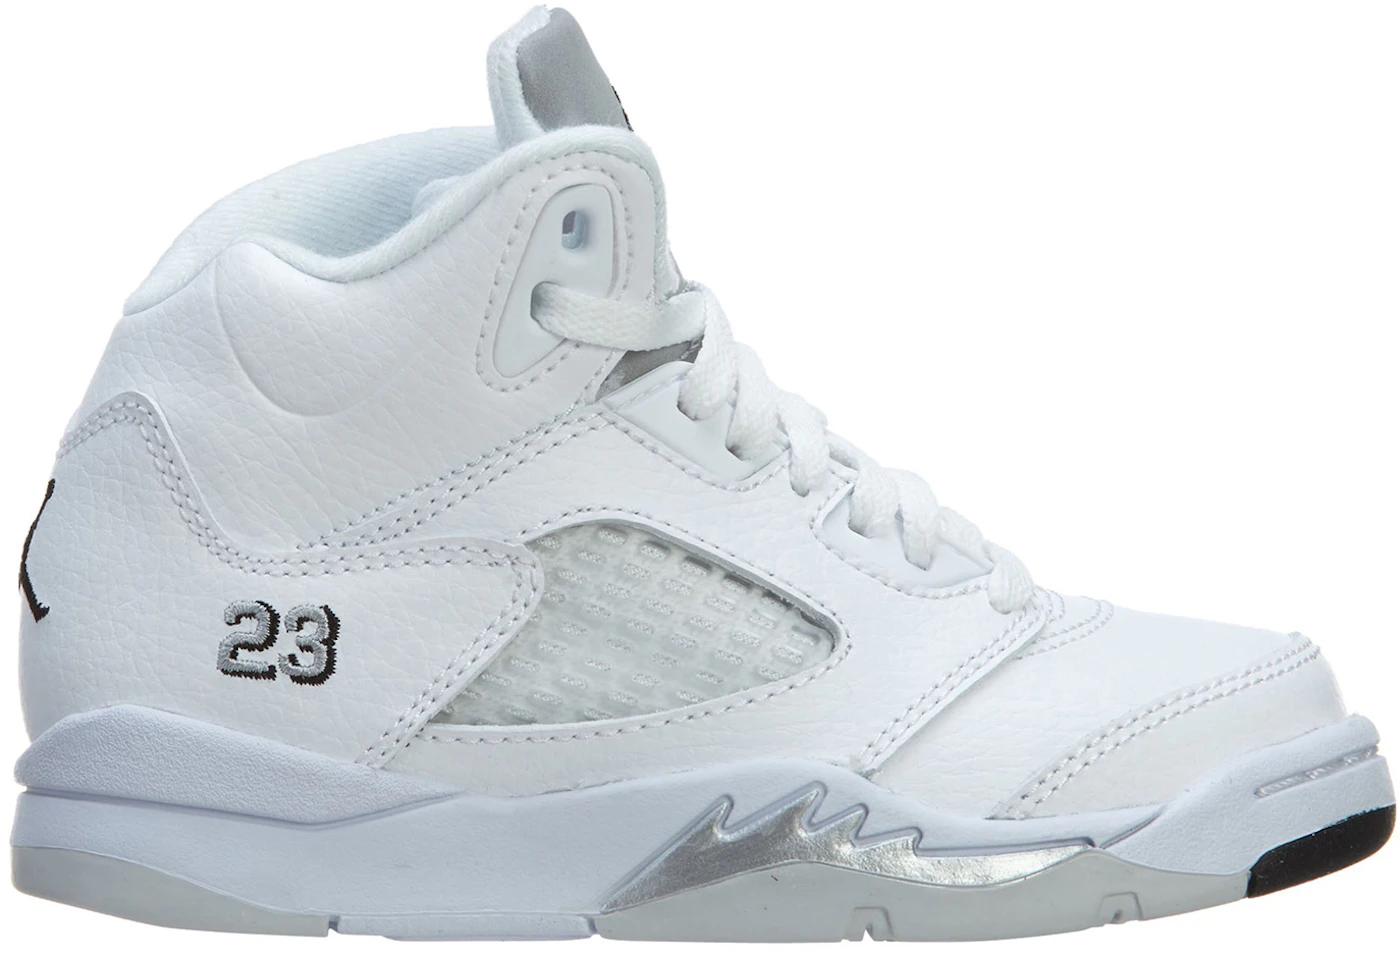 Size+8.5+-+Jordan+5+Retro+Metallic+White+2015 for sale online